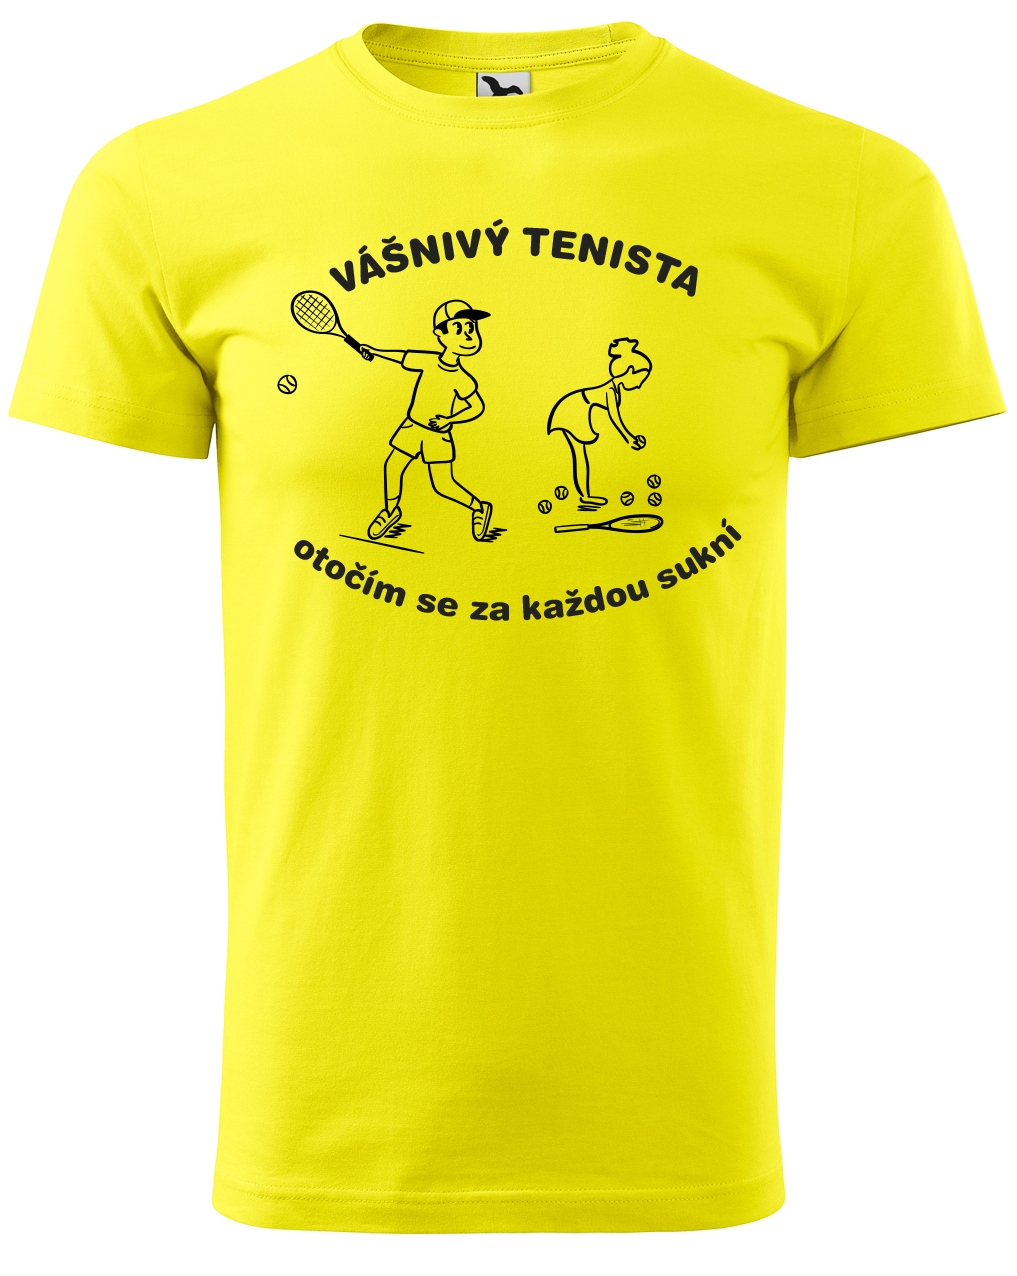 Vtipné tenisové tričko - Vášnivý tenista Velikost: XL, Barva: Žlutá (04)